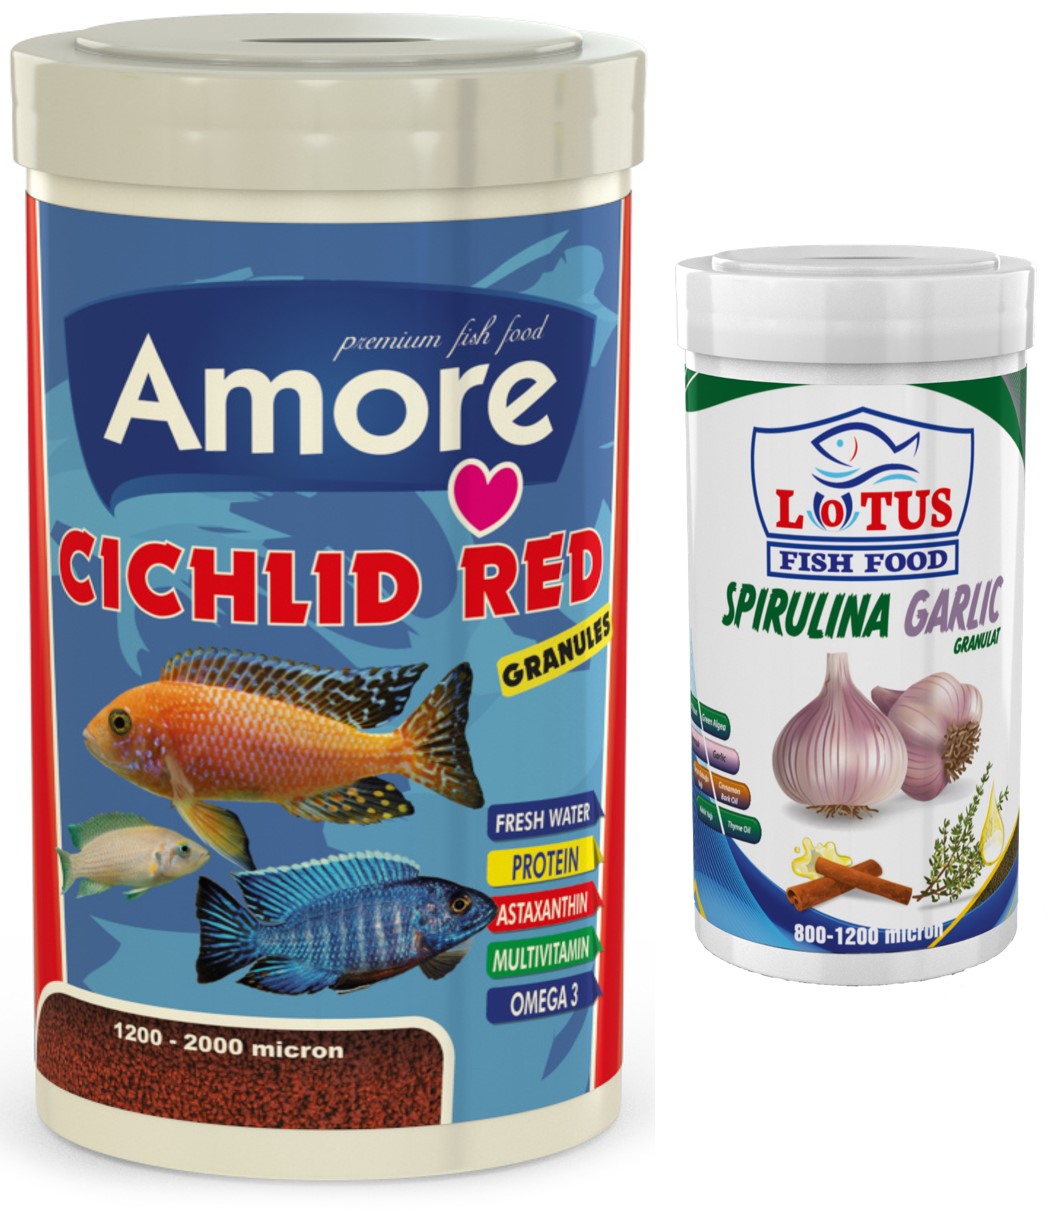 Amore Cichlid Red Granules 1000ml + Lotus Spirulina Garlic 250ml Kutu Balık Yemi